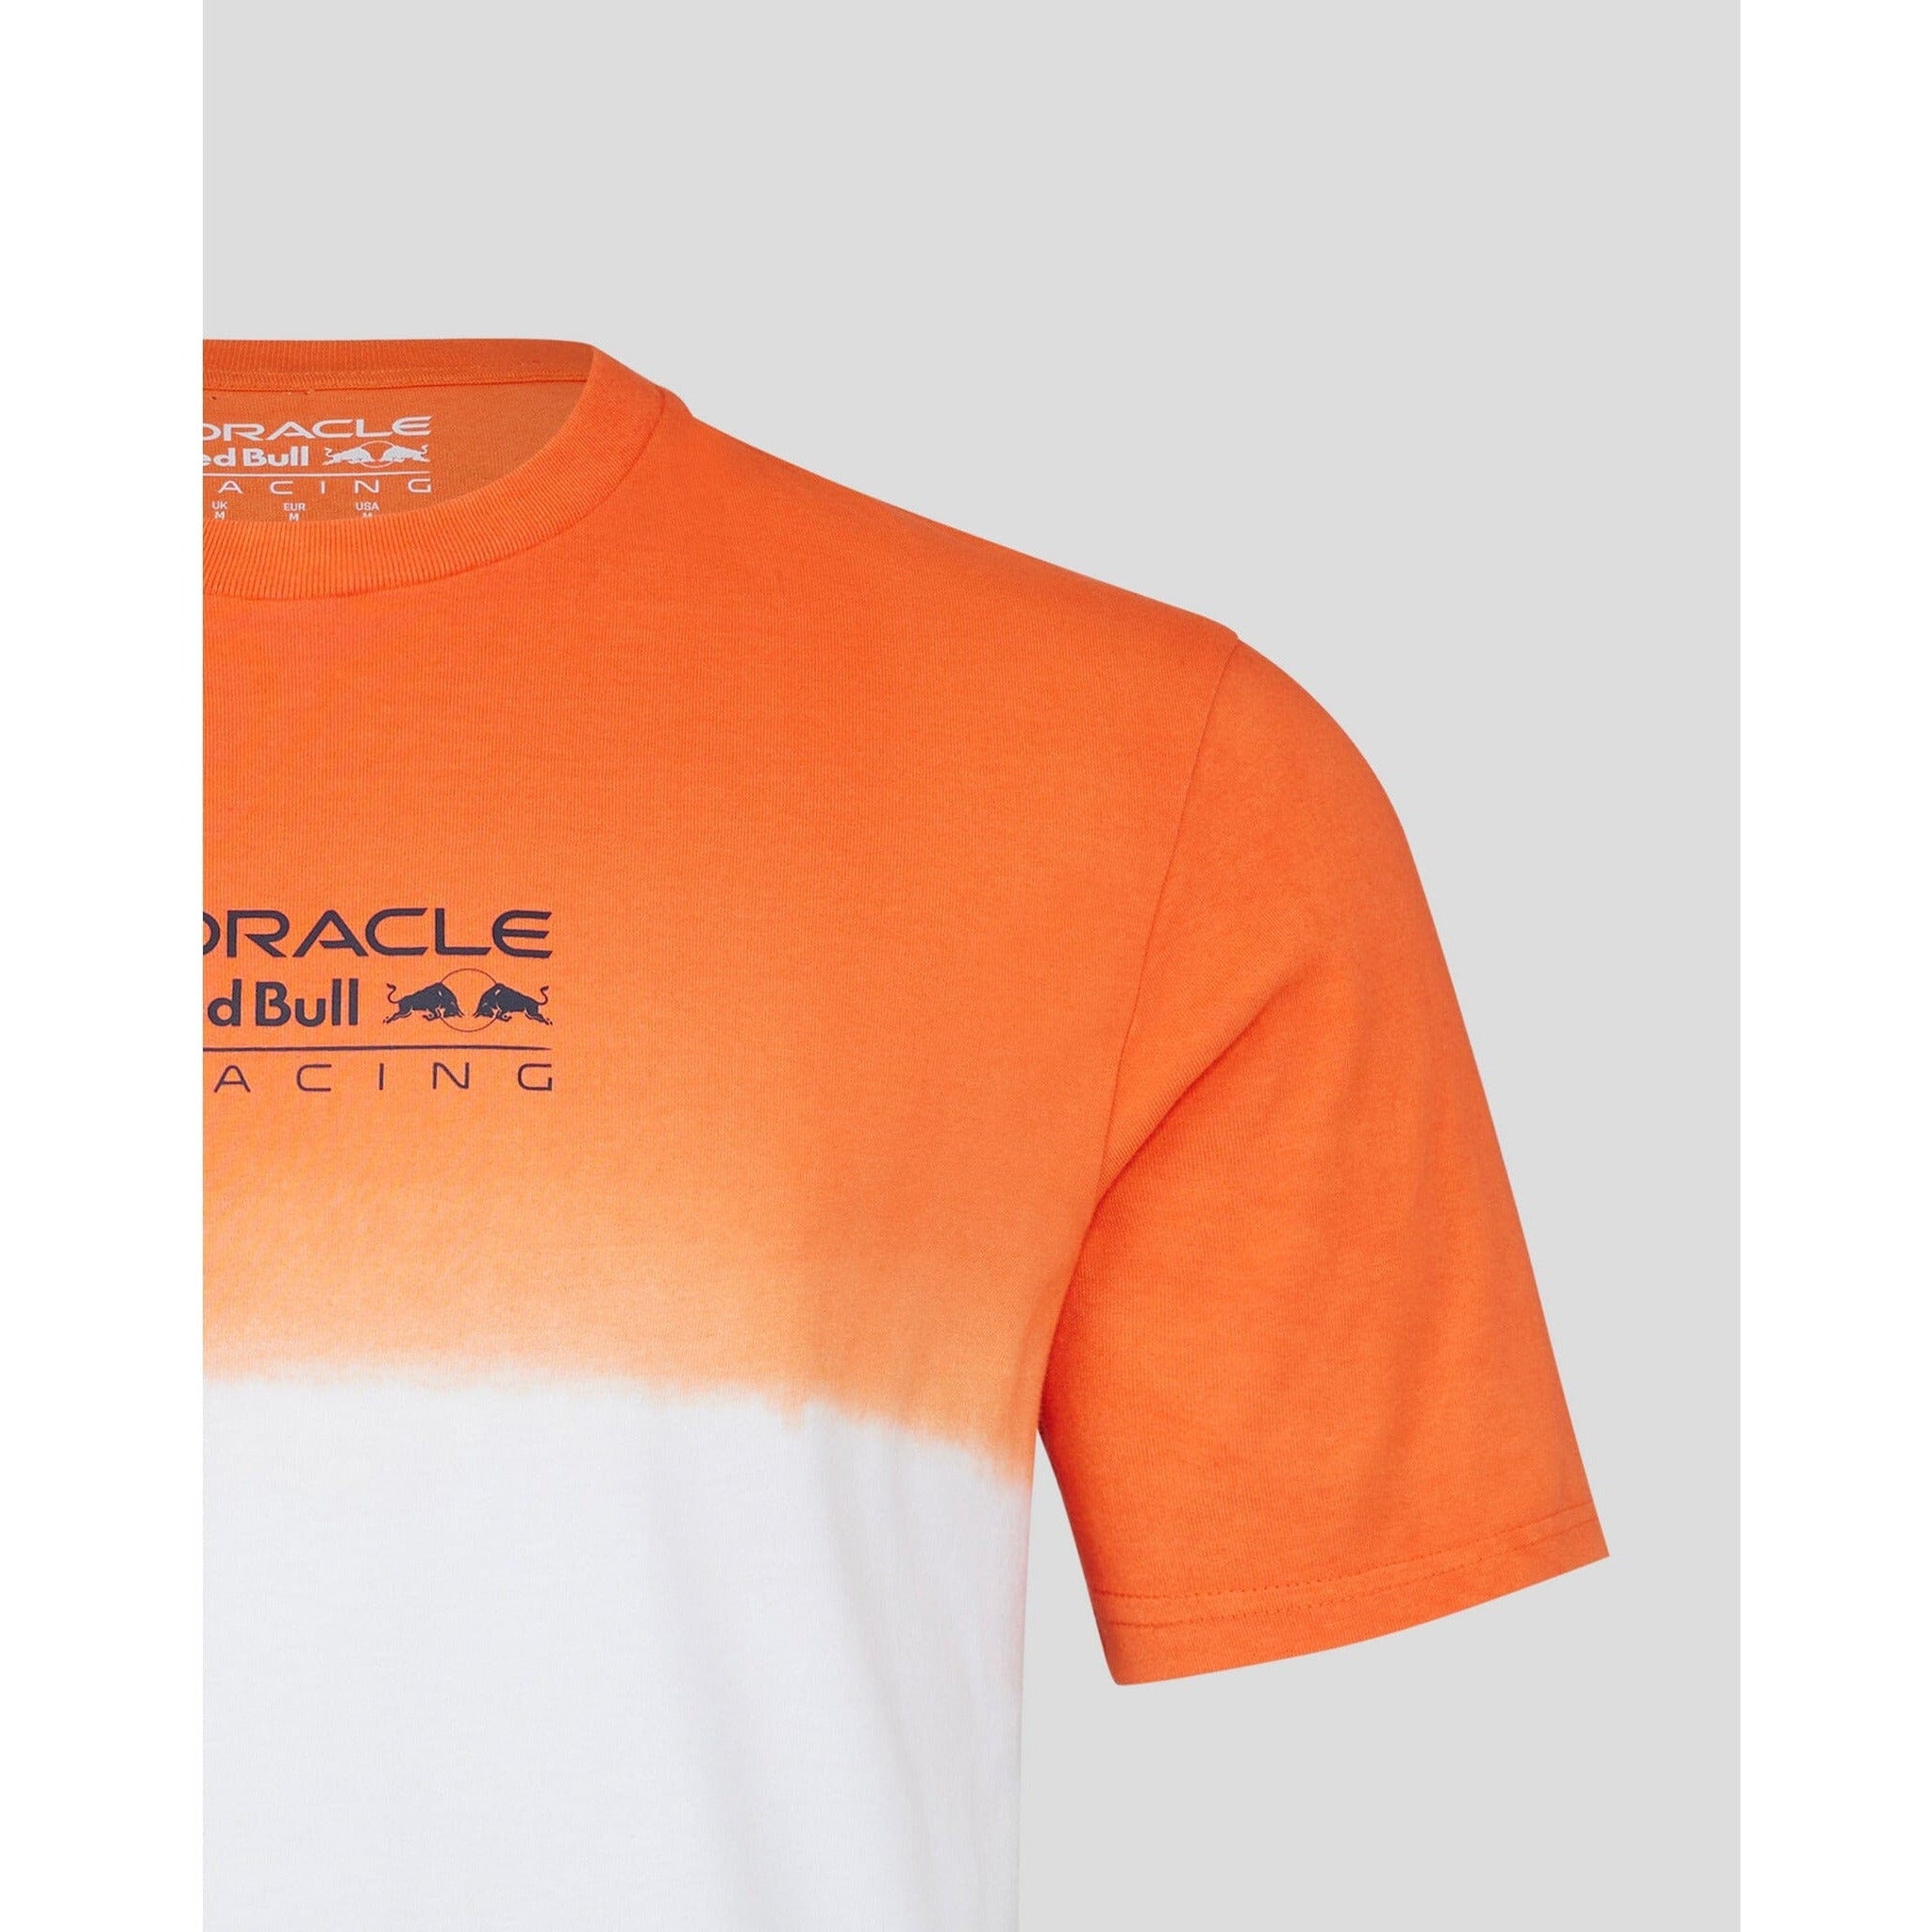 Red Bull Racing F1 Max Verstappen Driver T-Shirt - Exotic Orange/White